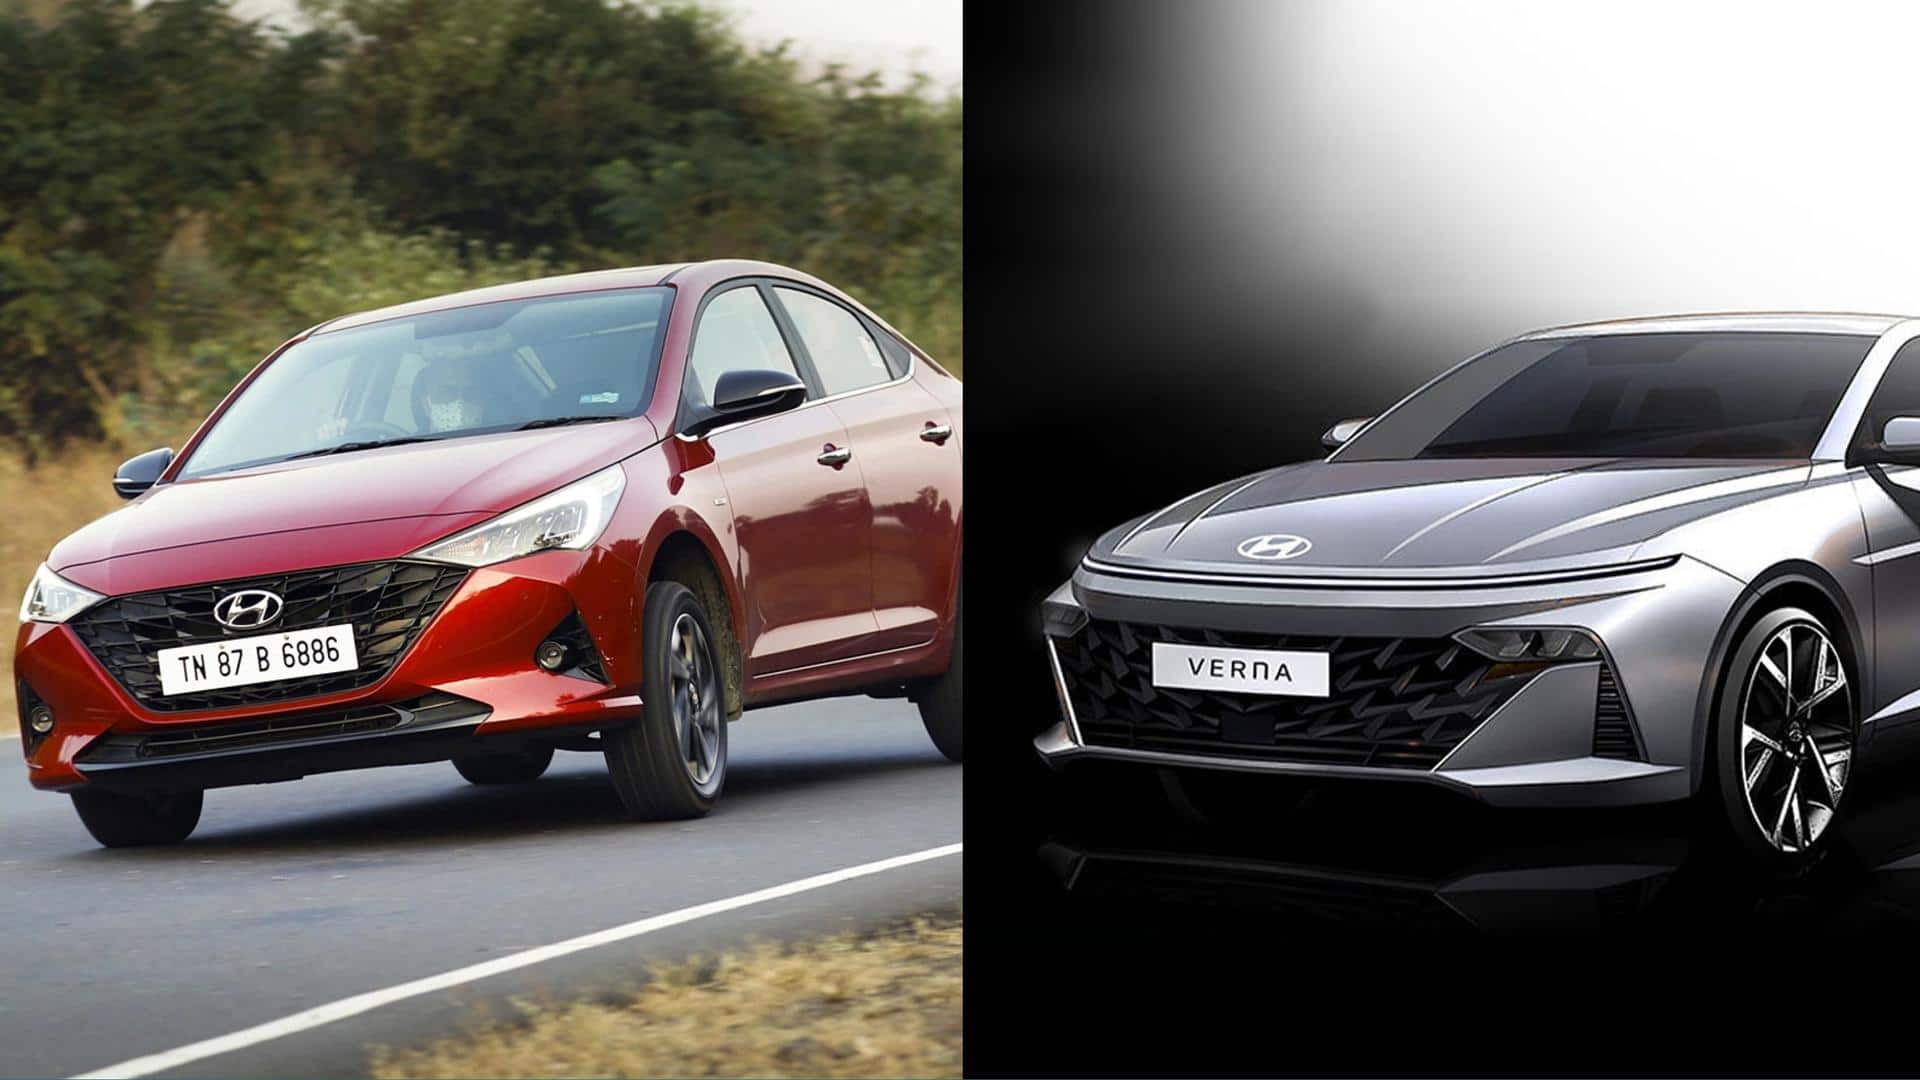 2023 Hyundai VERNA v/s 2022 model: Know all the differences